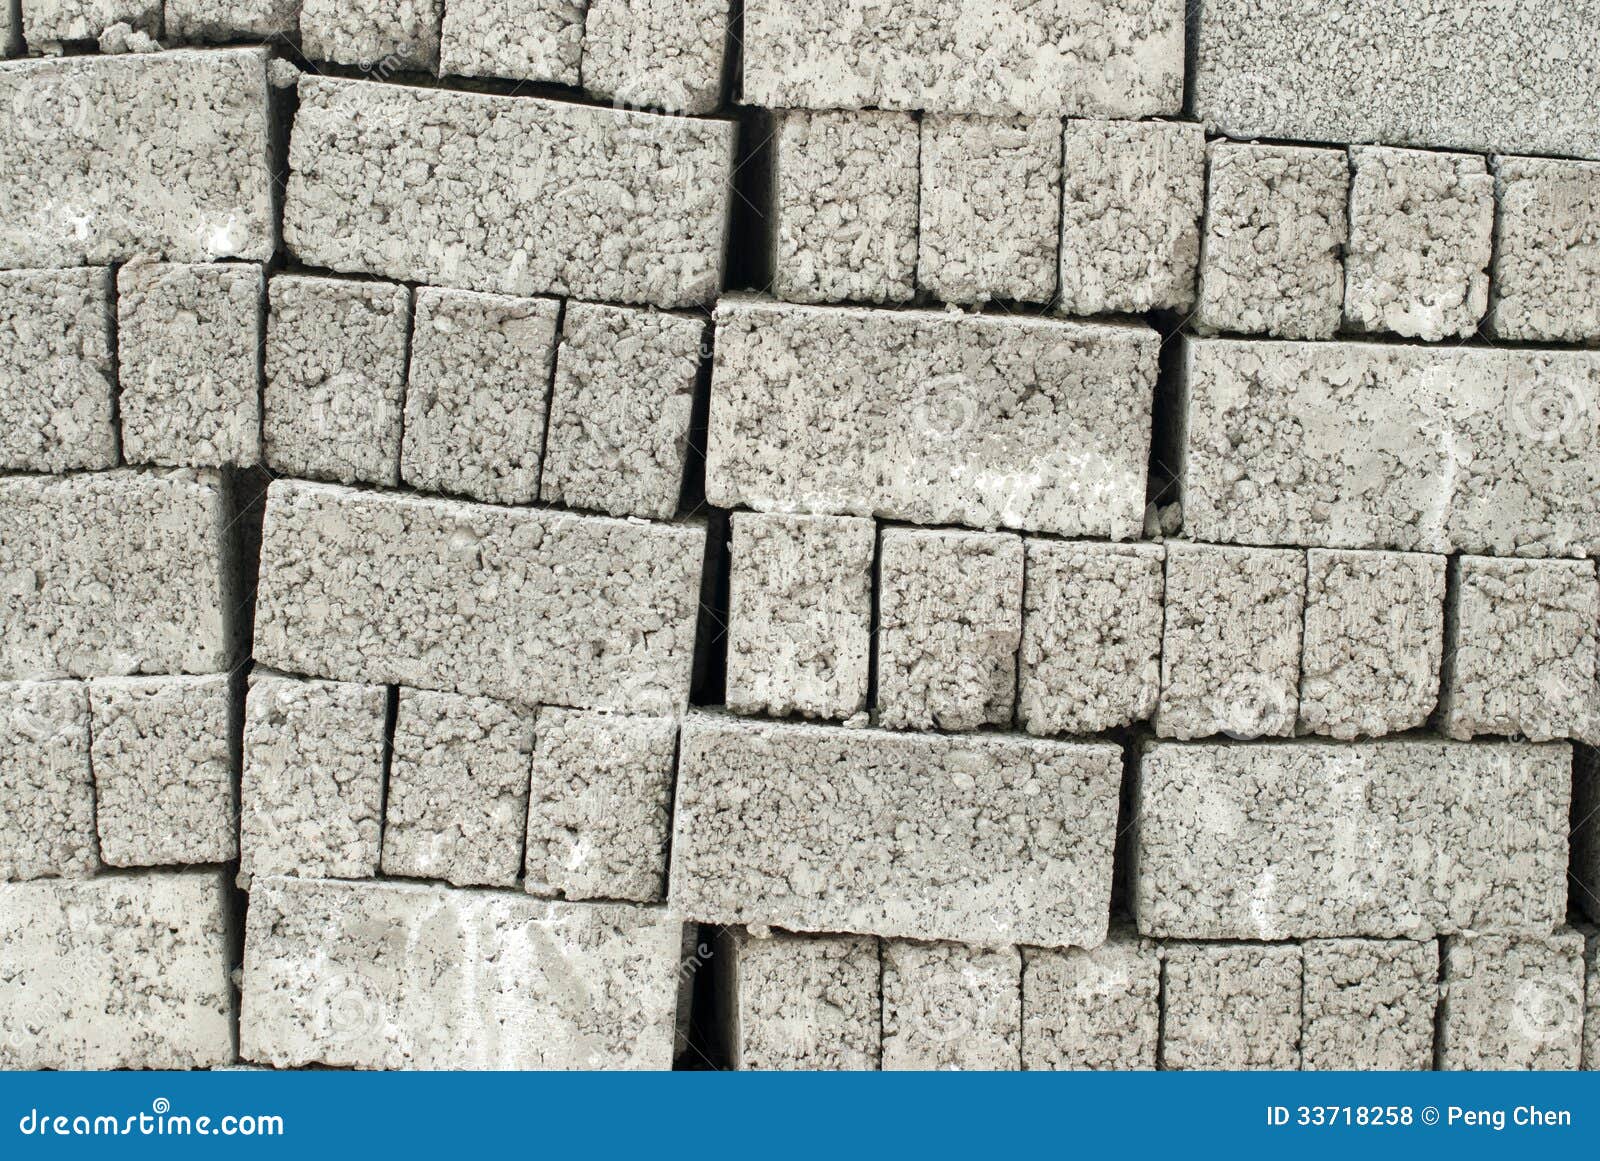 Cement block stock photo. Image of stone, building, activity - 33718258